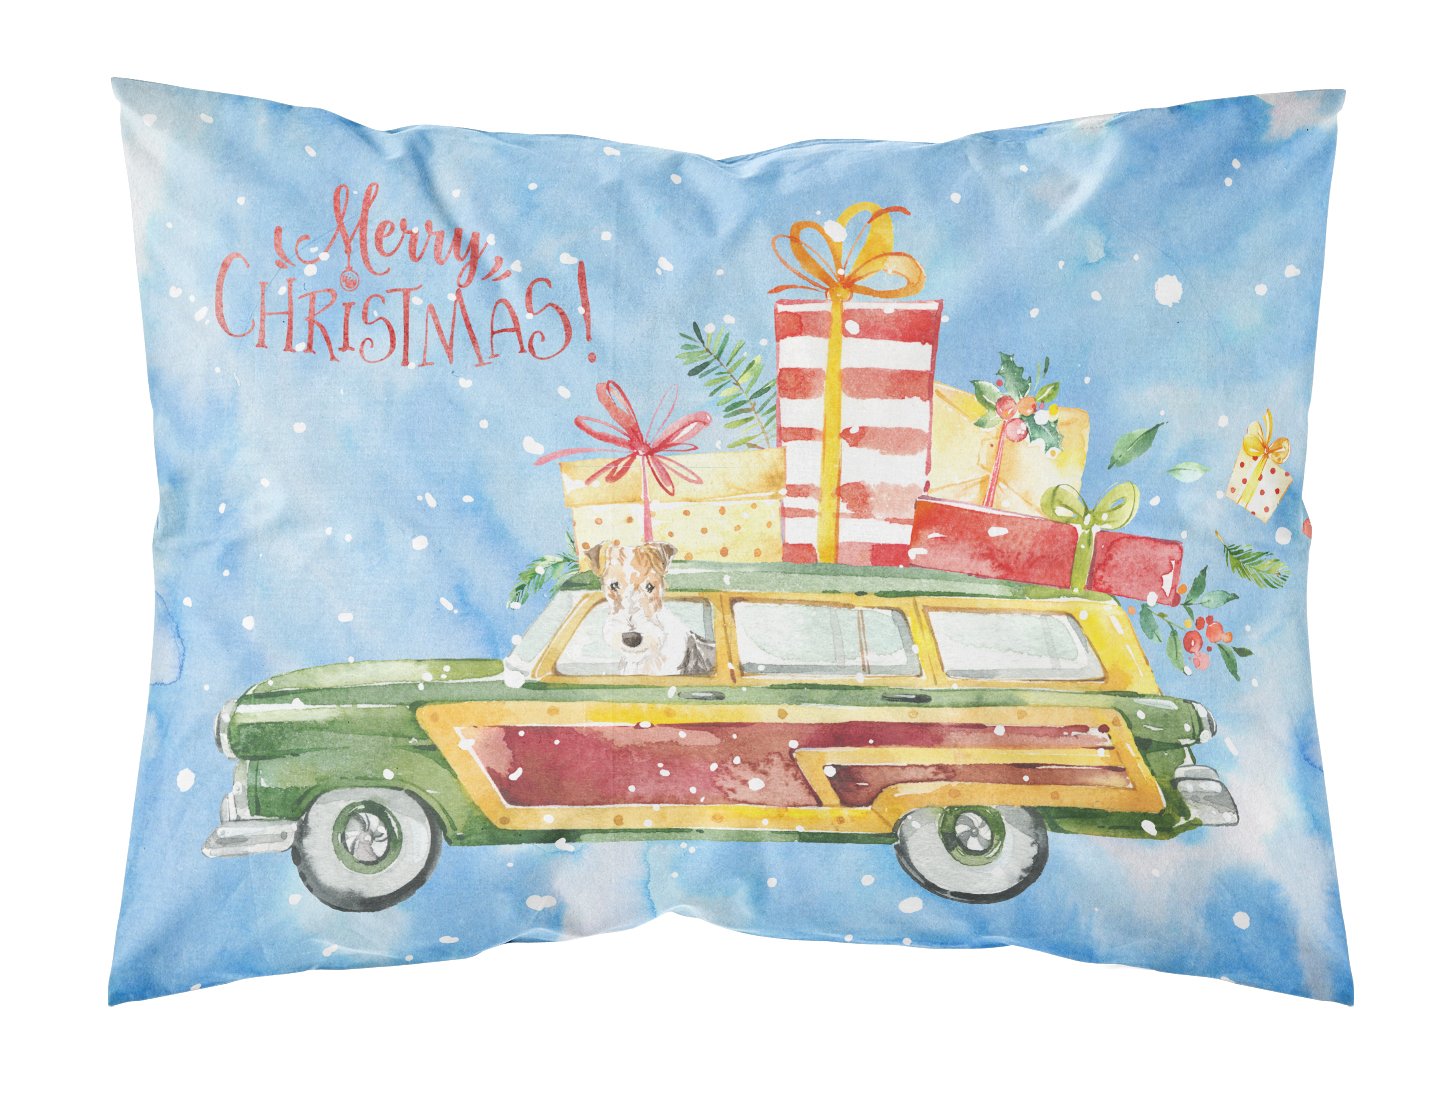 Merry Christmas Fox Terrier Fabric Standard Pillowcase CK2430PILLOWCASE by Caroline's Treasures